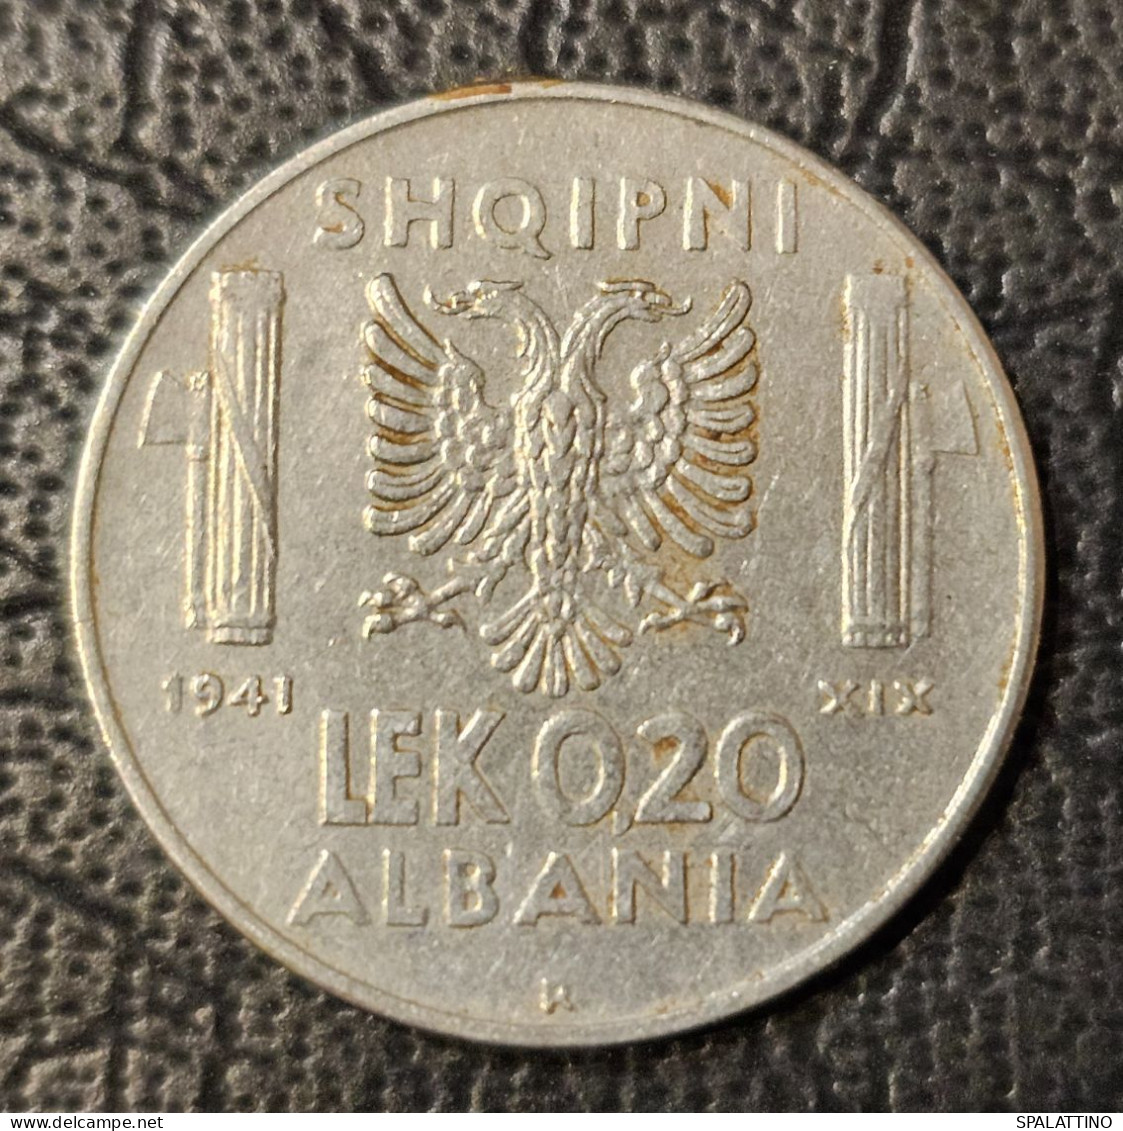 ALBANIA- 0,20 LEK 1941. - Albania